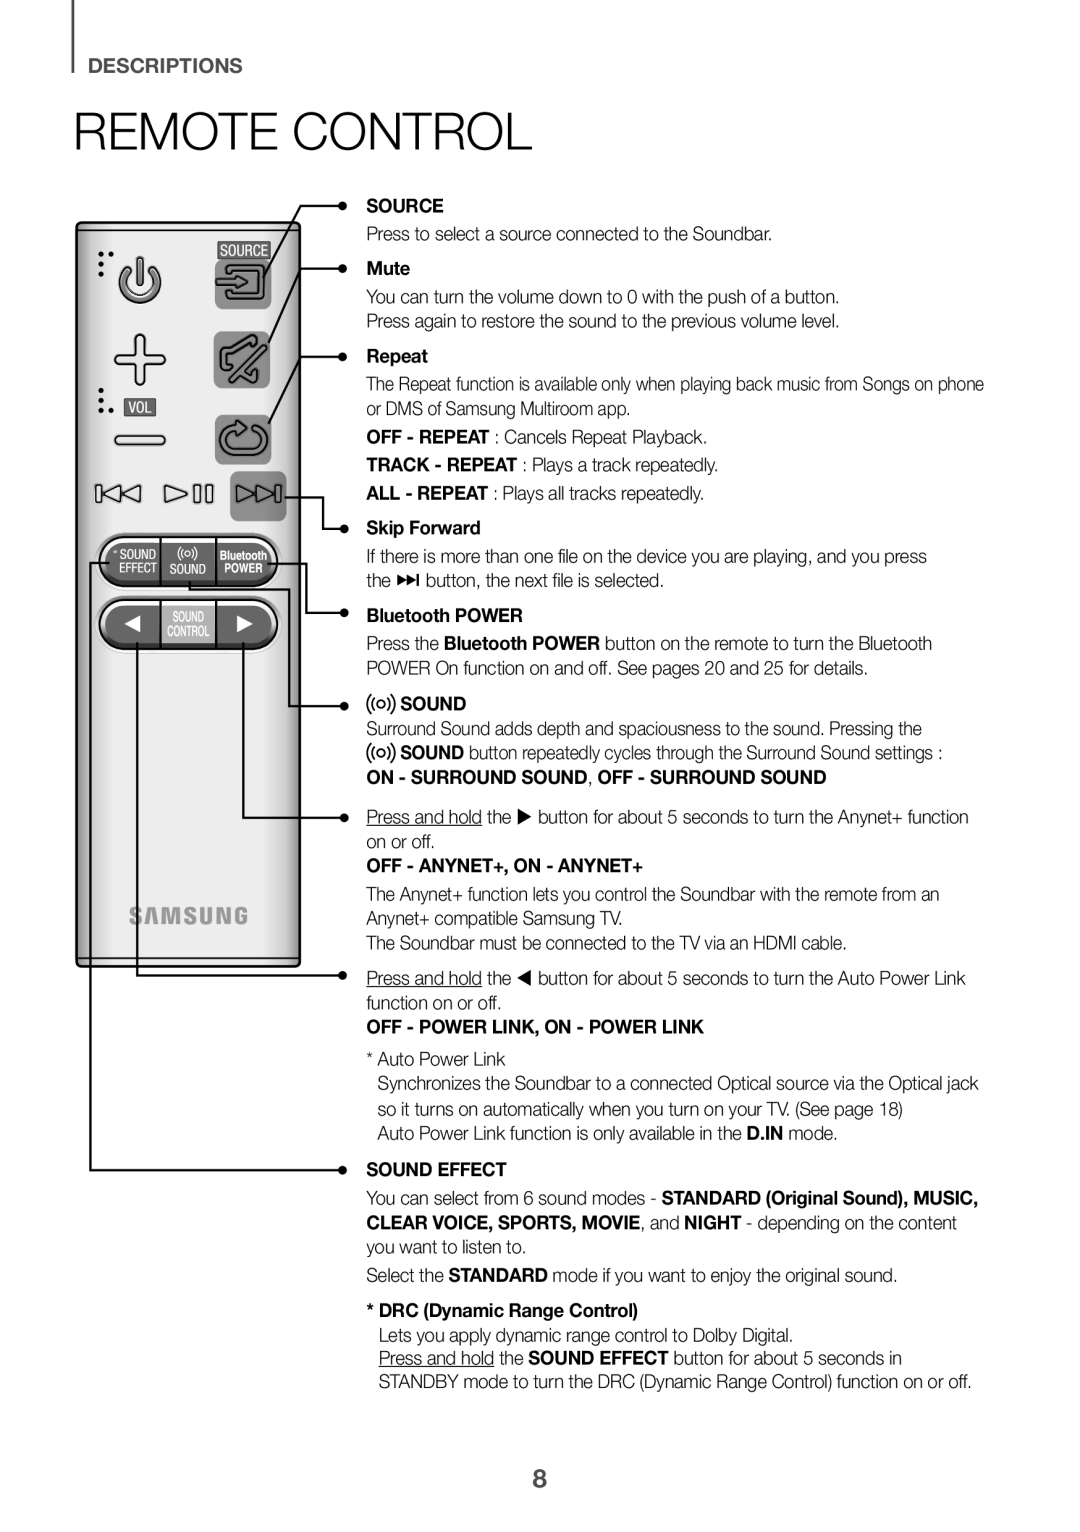 Samsung HW-K651/EN Remote Control, Descriptions, Source, Mute, Repeat, Skip Forward, Bluetooth POWER, Sound Effect 